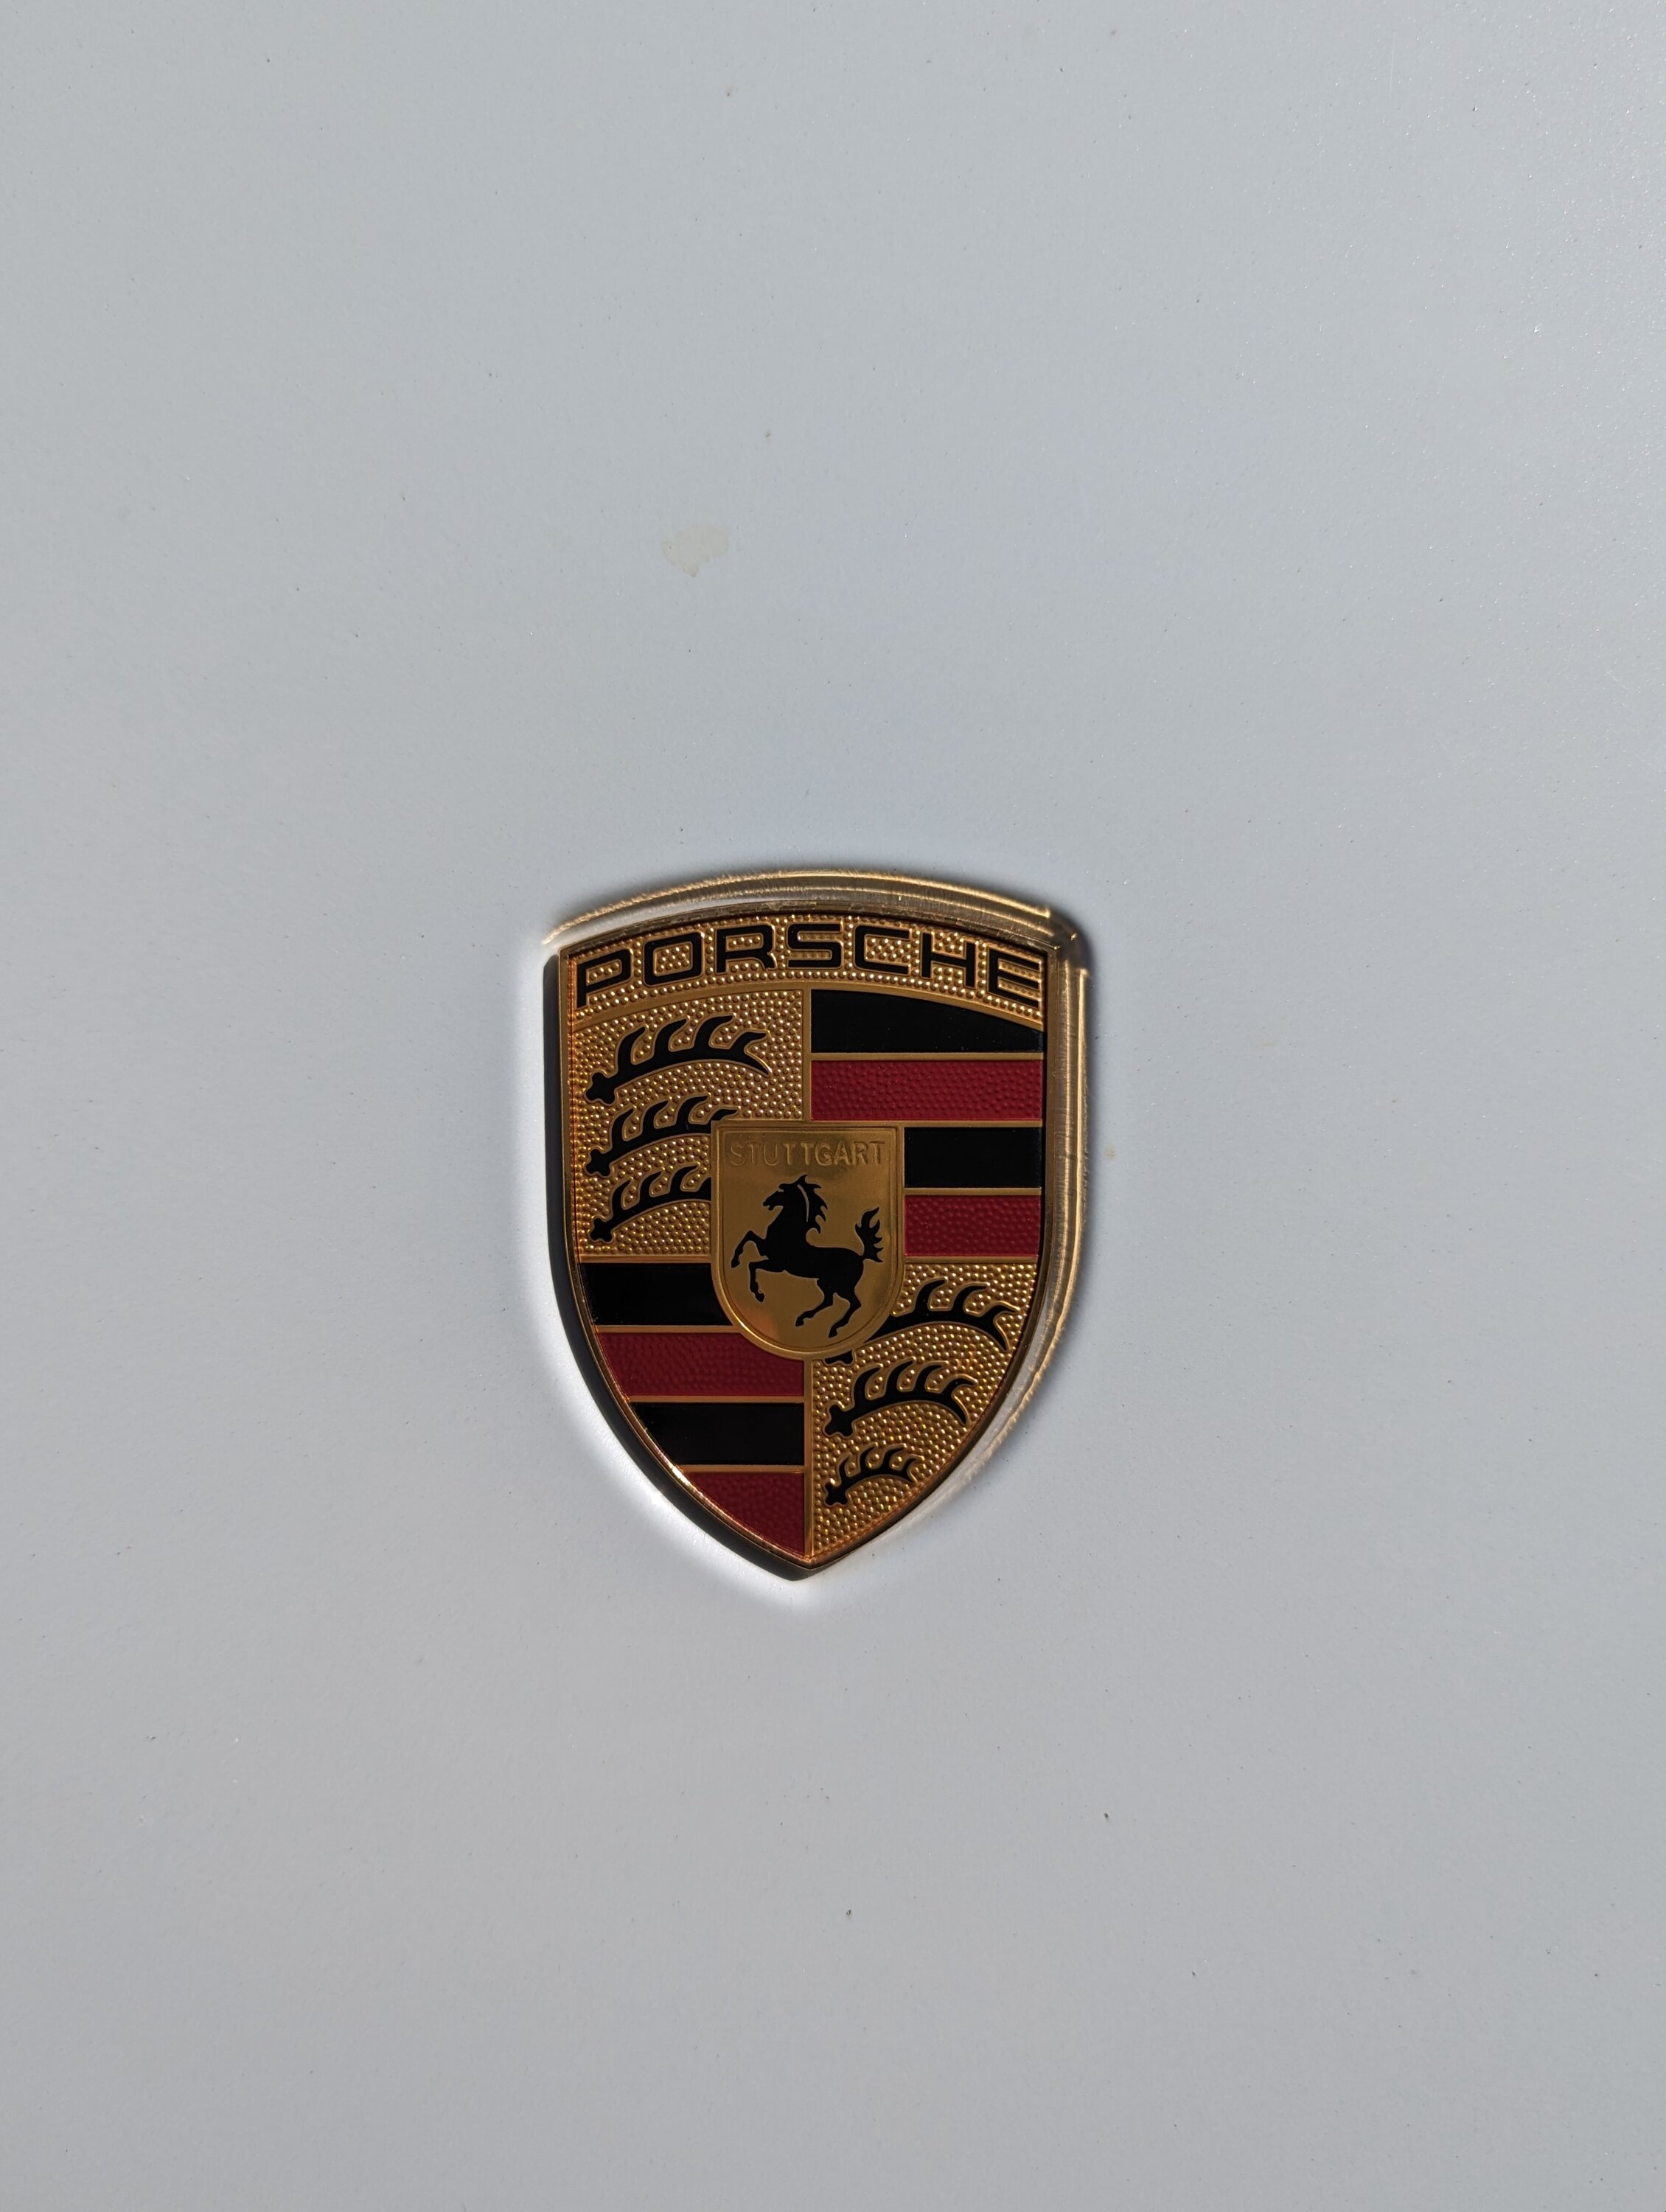 Porsche Taycan Need monochrome replacement hood emblem PXL_20230831_224806376